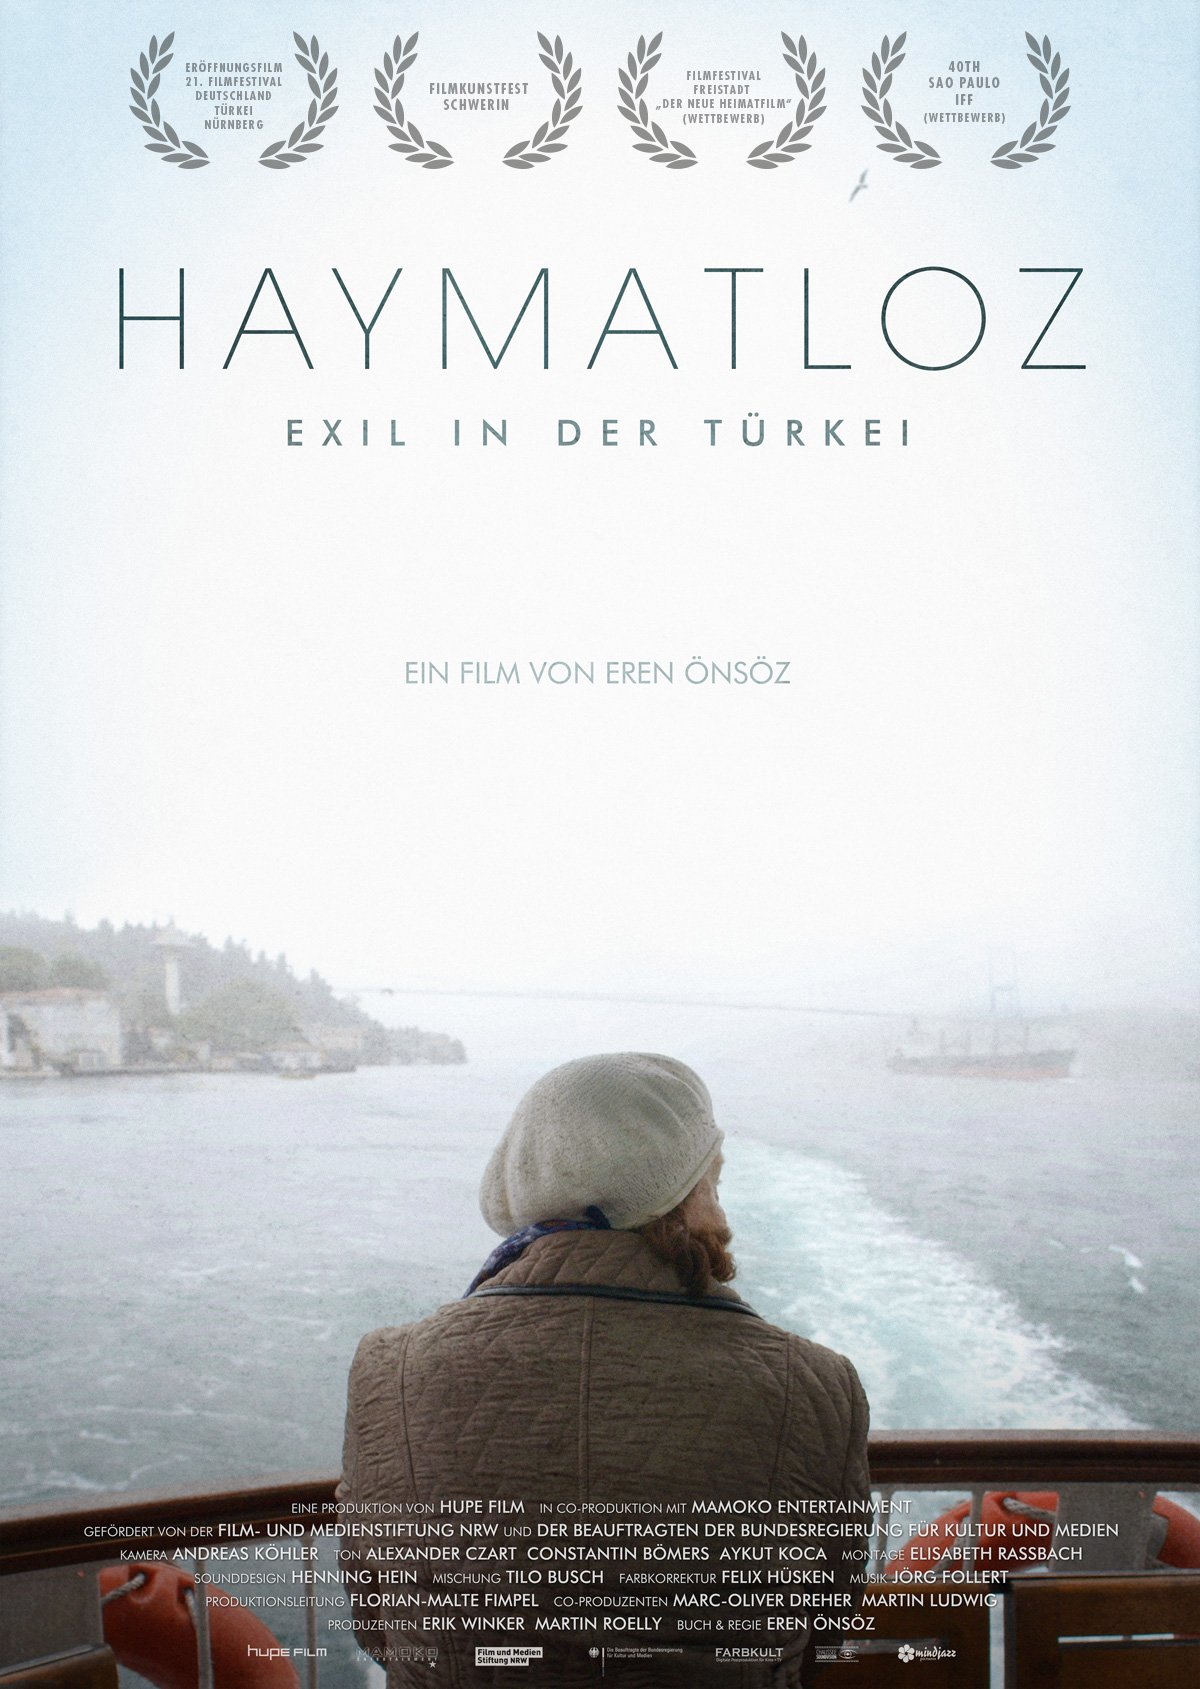 Official "Haymatloz" film poster (source: haymatloz.com)